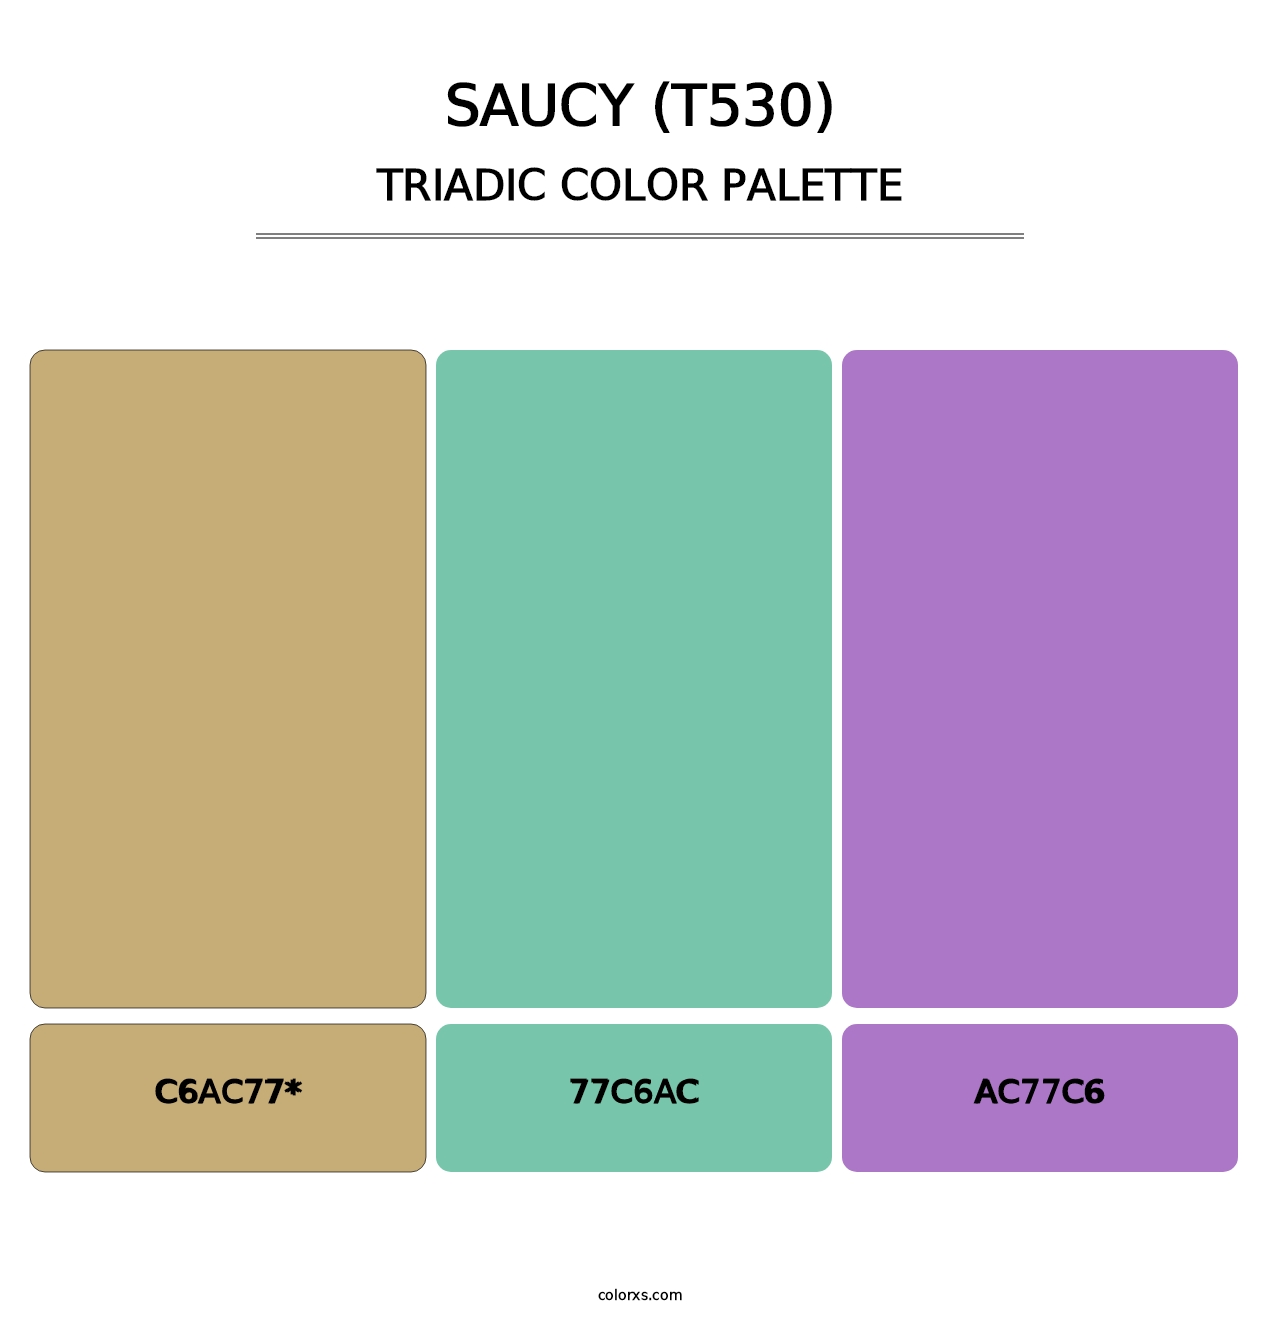 Saucy (T530) - Triadic Color Palette